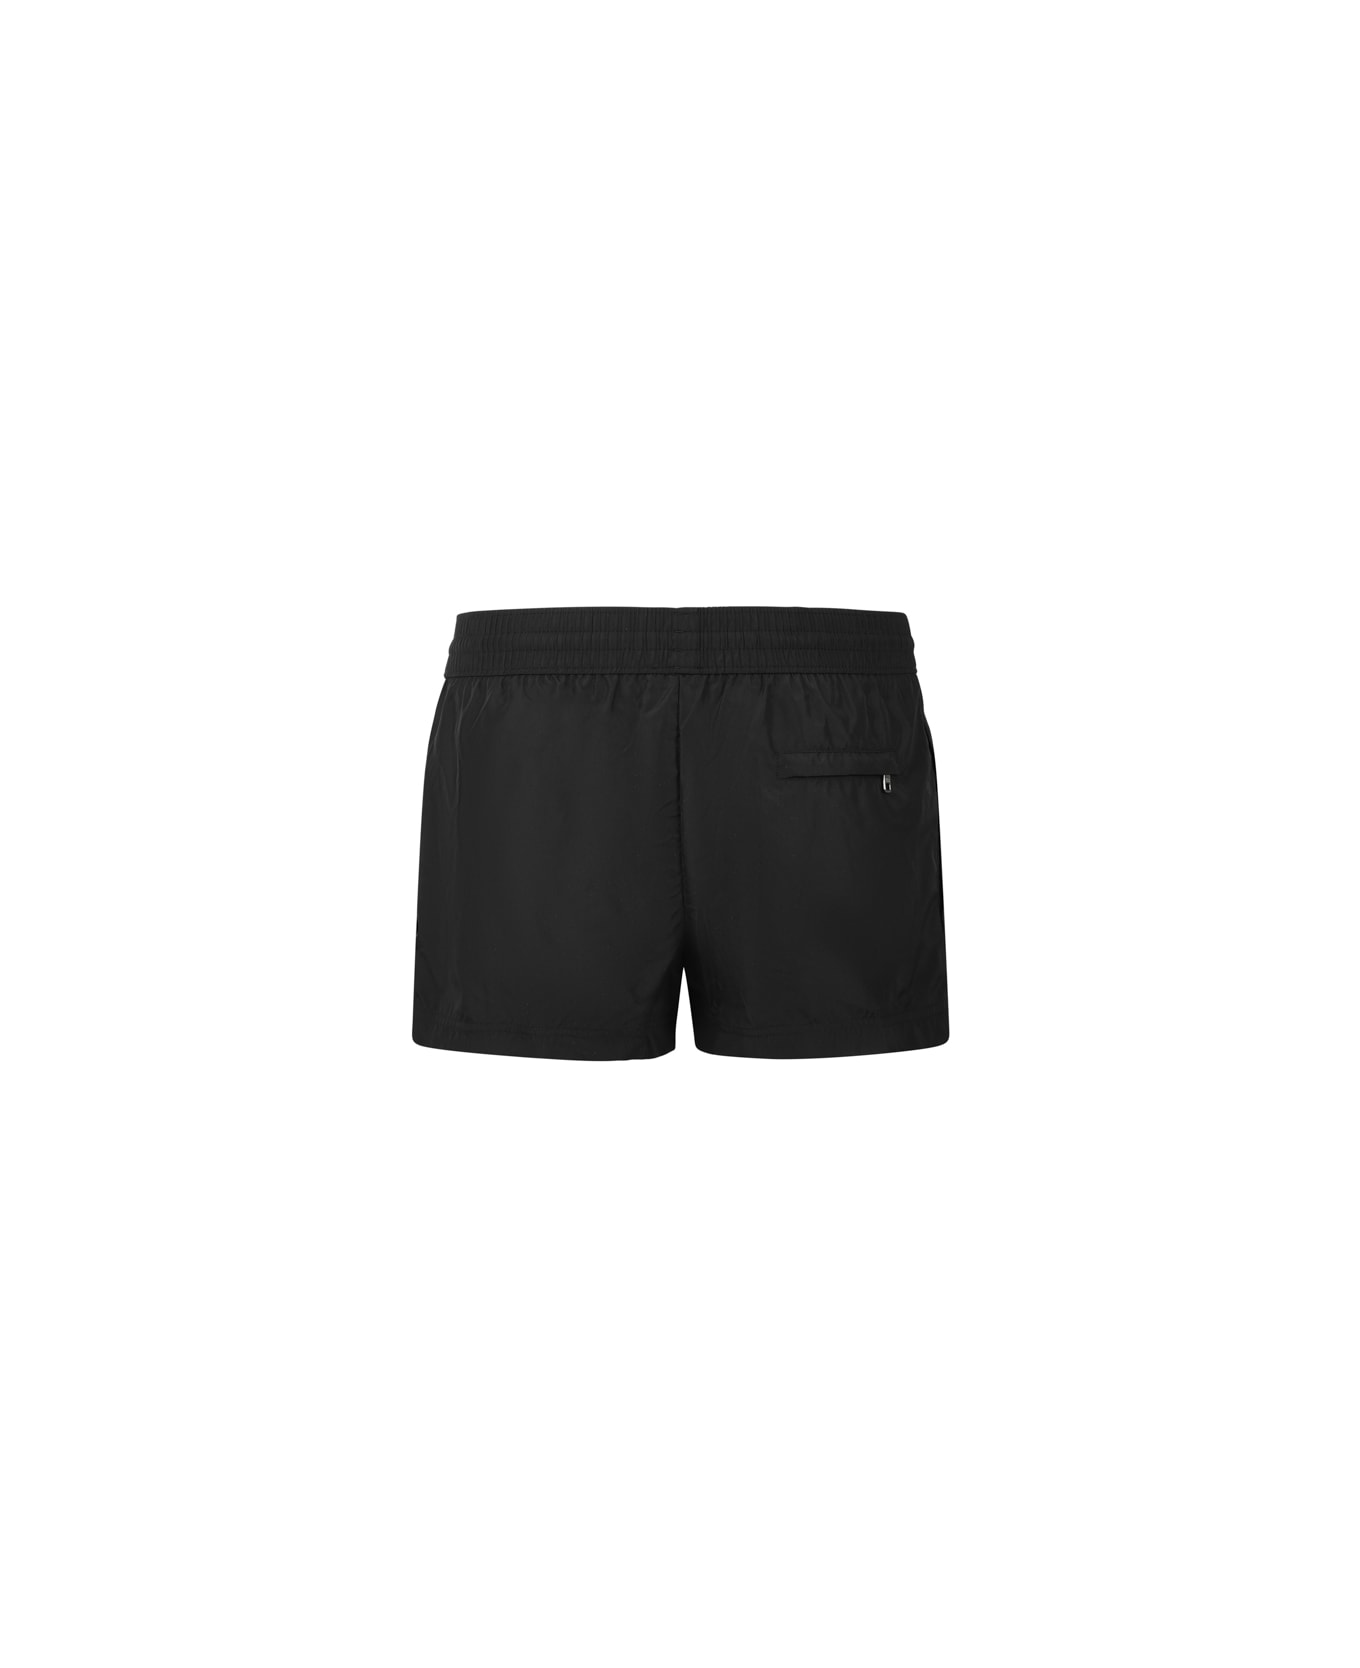 Dolce & Gabbana Black Polyester Swimming Shorts - N0000